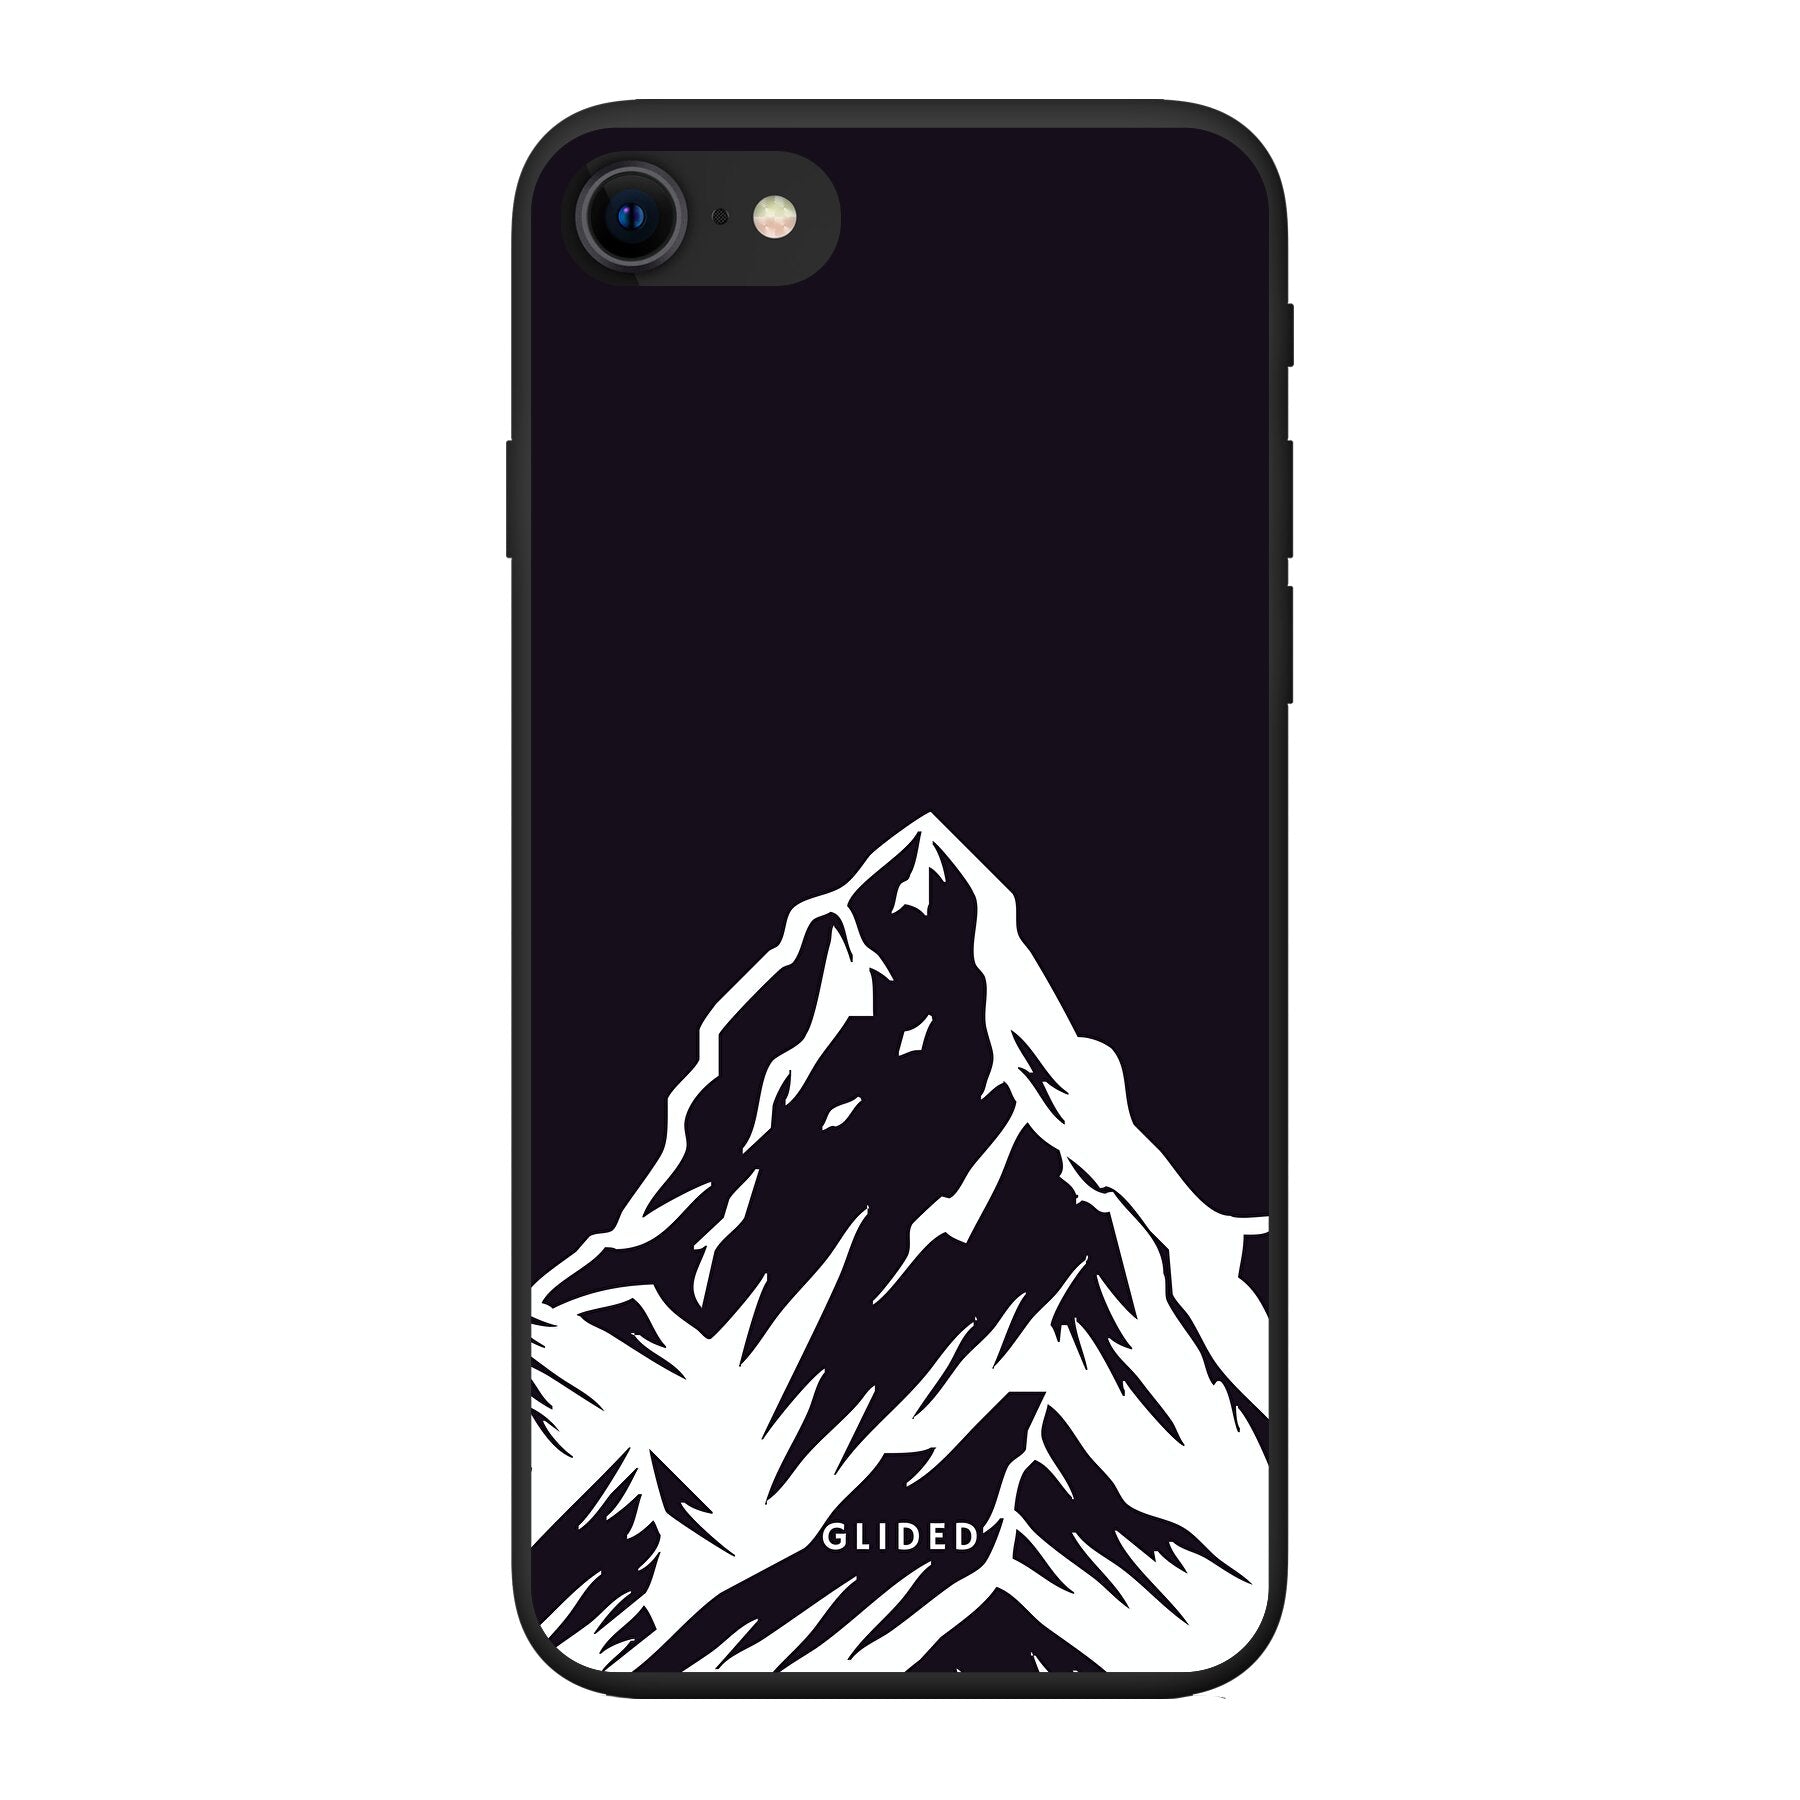 Alpine Adventure - iPhone 7 - Biologisch Abbaubar